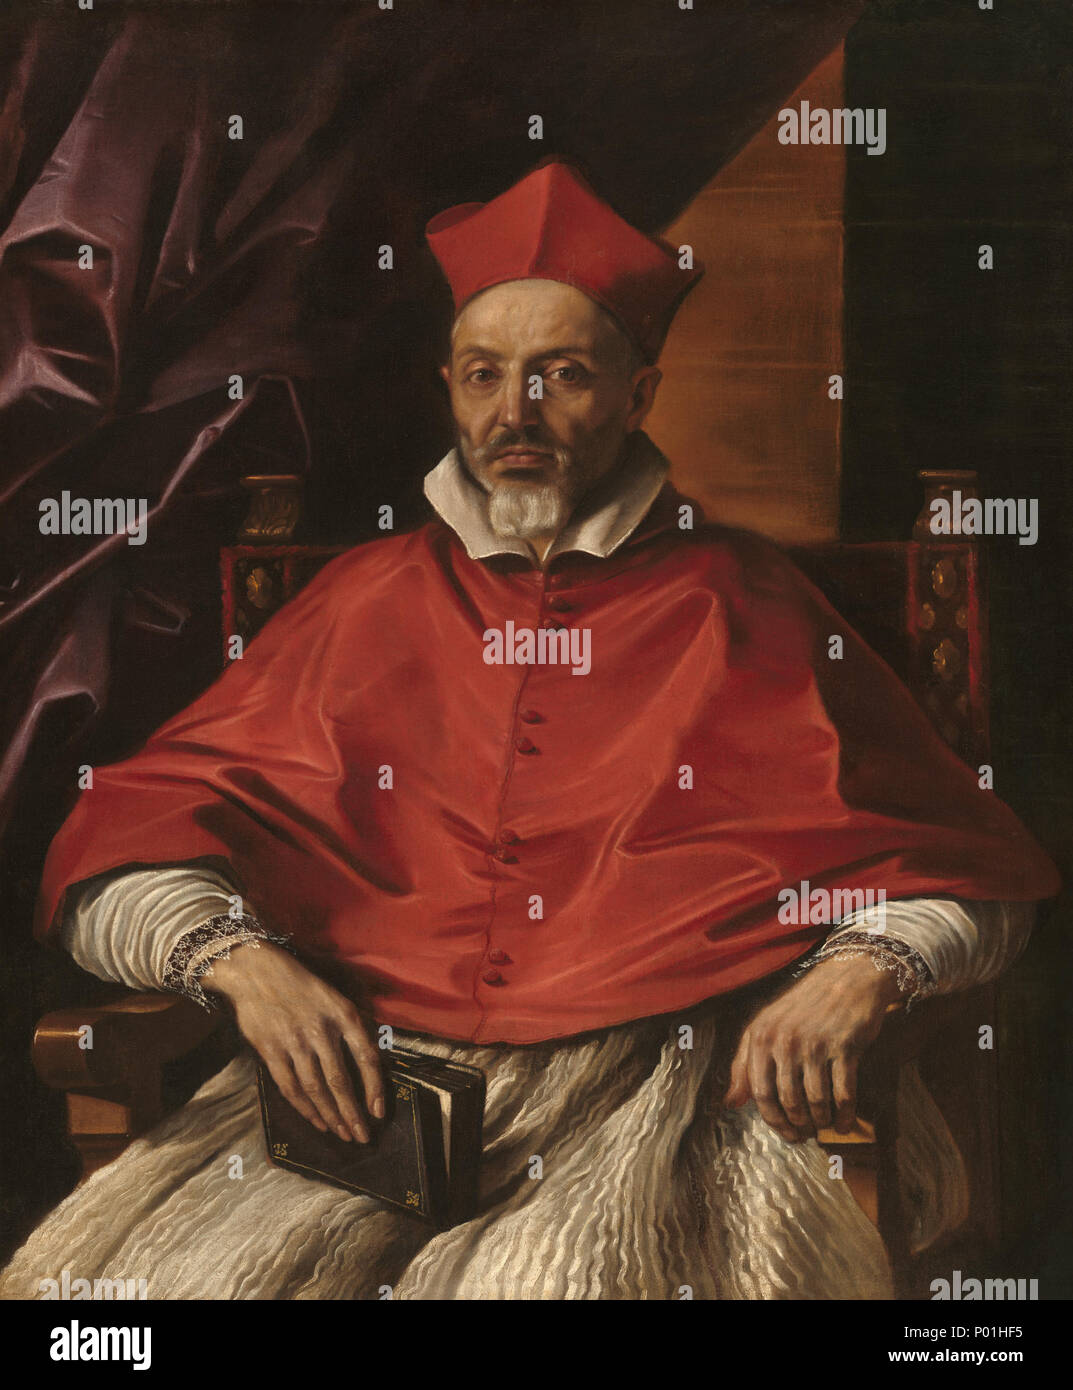 Malerei; Öl auf Leinwand; gesamt: 117,4 x 96,2 cm (46 1/4 x 37 7/8 in.) gerahmt: 147,6 x 126,7 x 6,9 cm (58 1/8 x 49 7/8 x 2 11/16 in.); 7 Kardinal Francesco Cennini ein 25627 Stockfoto